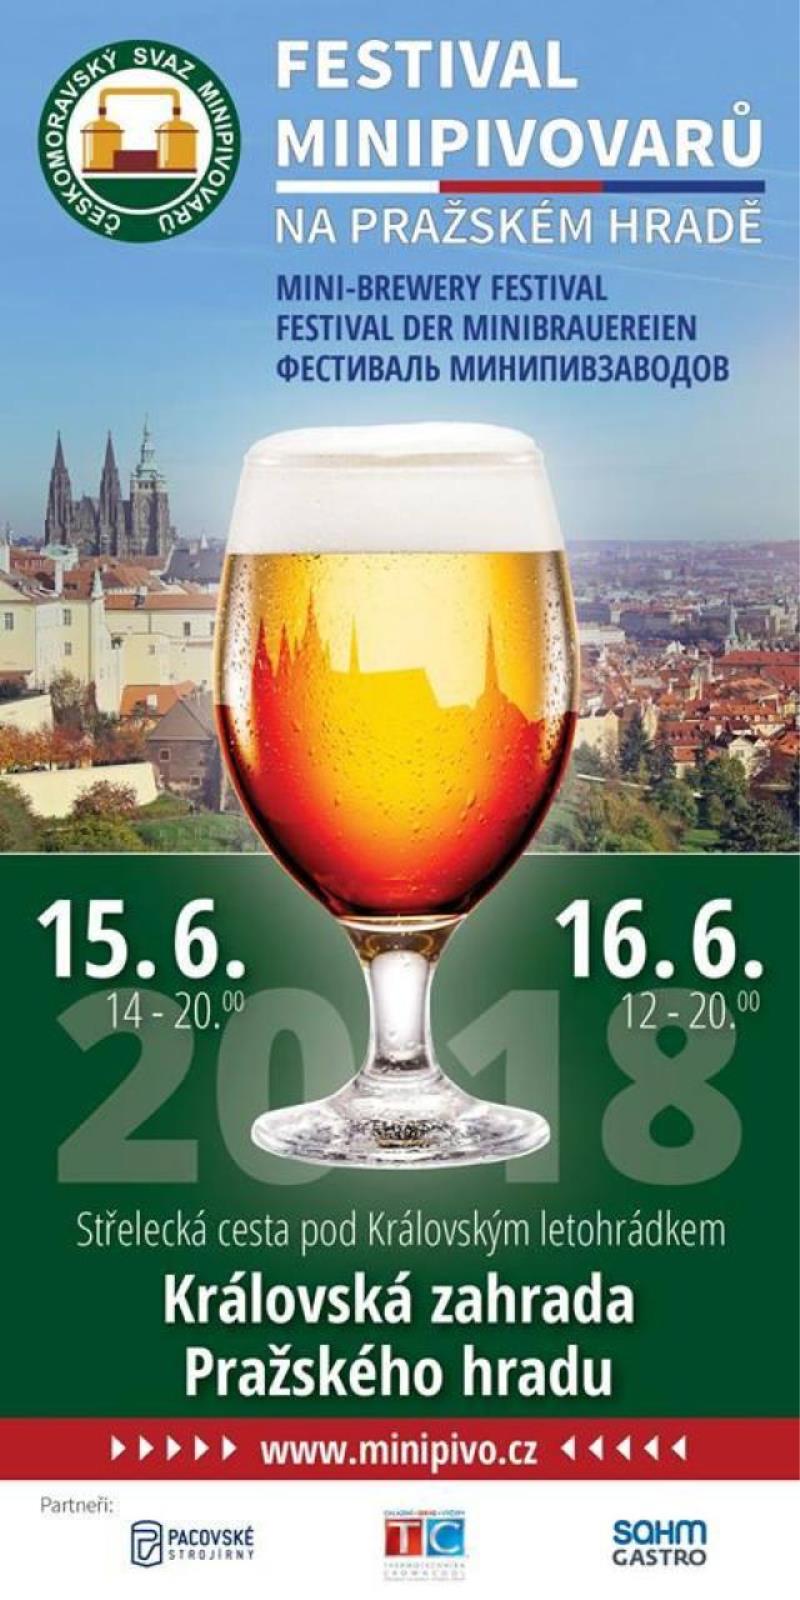 VII. Festival minipivovarů na Pražském hradě 2018 - upoutávka